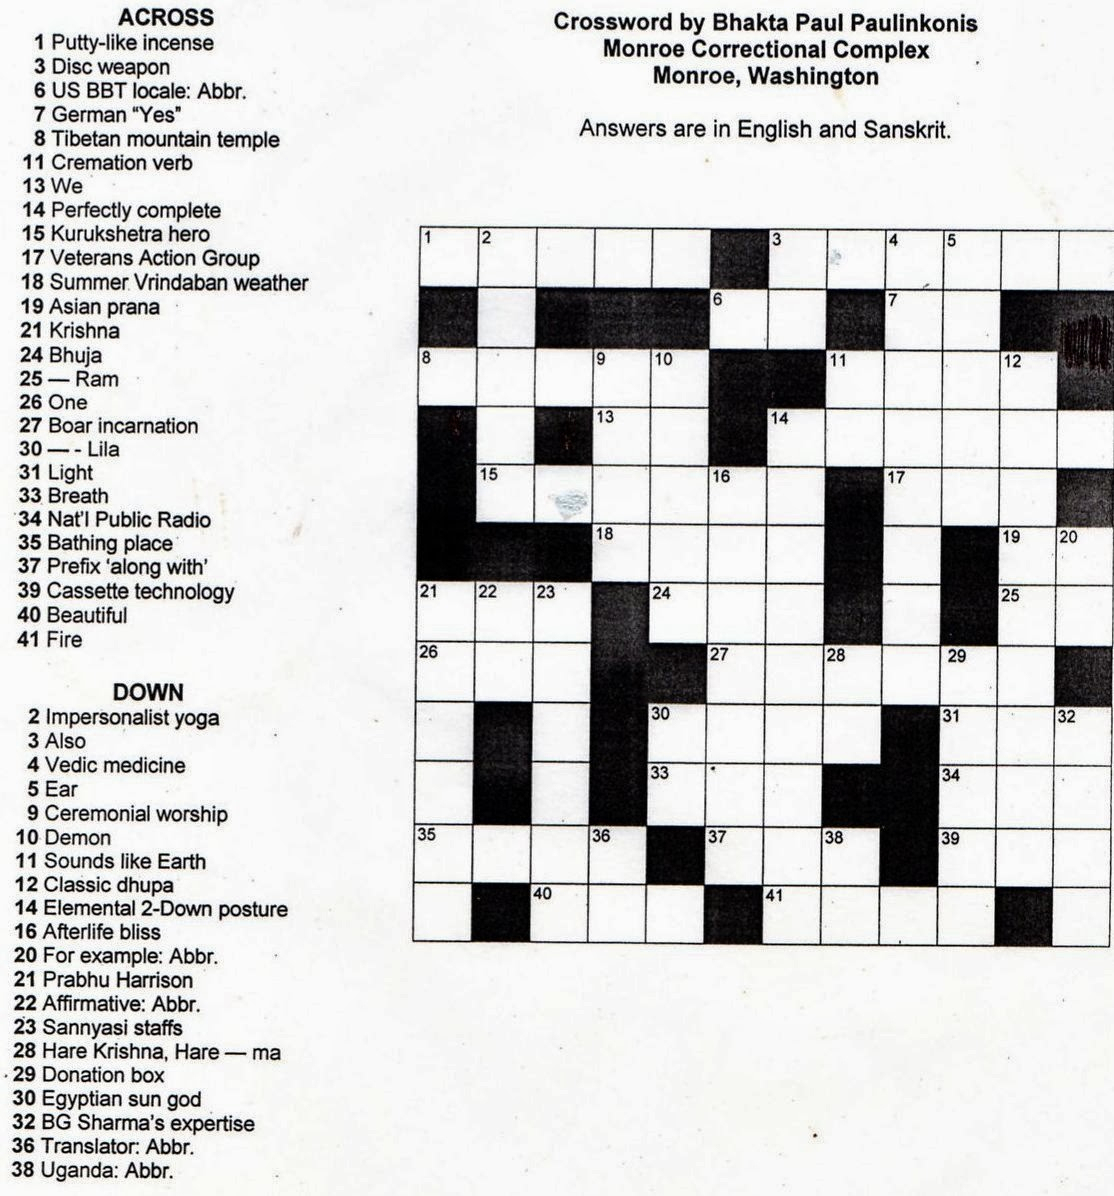 Clueless Crossword Puzzles Printable